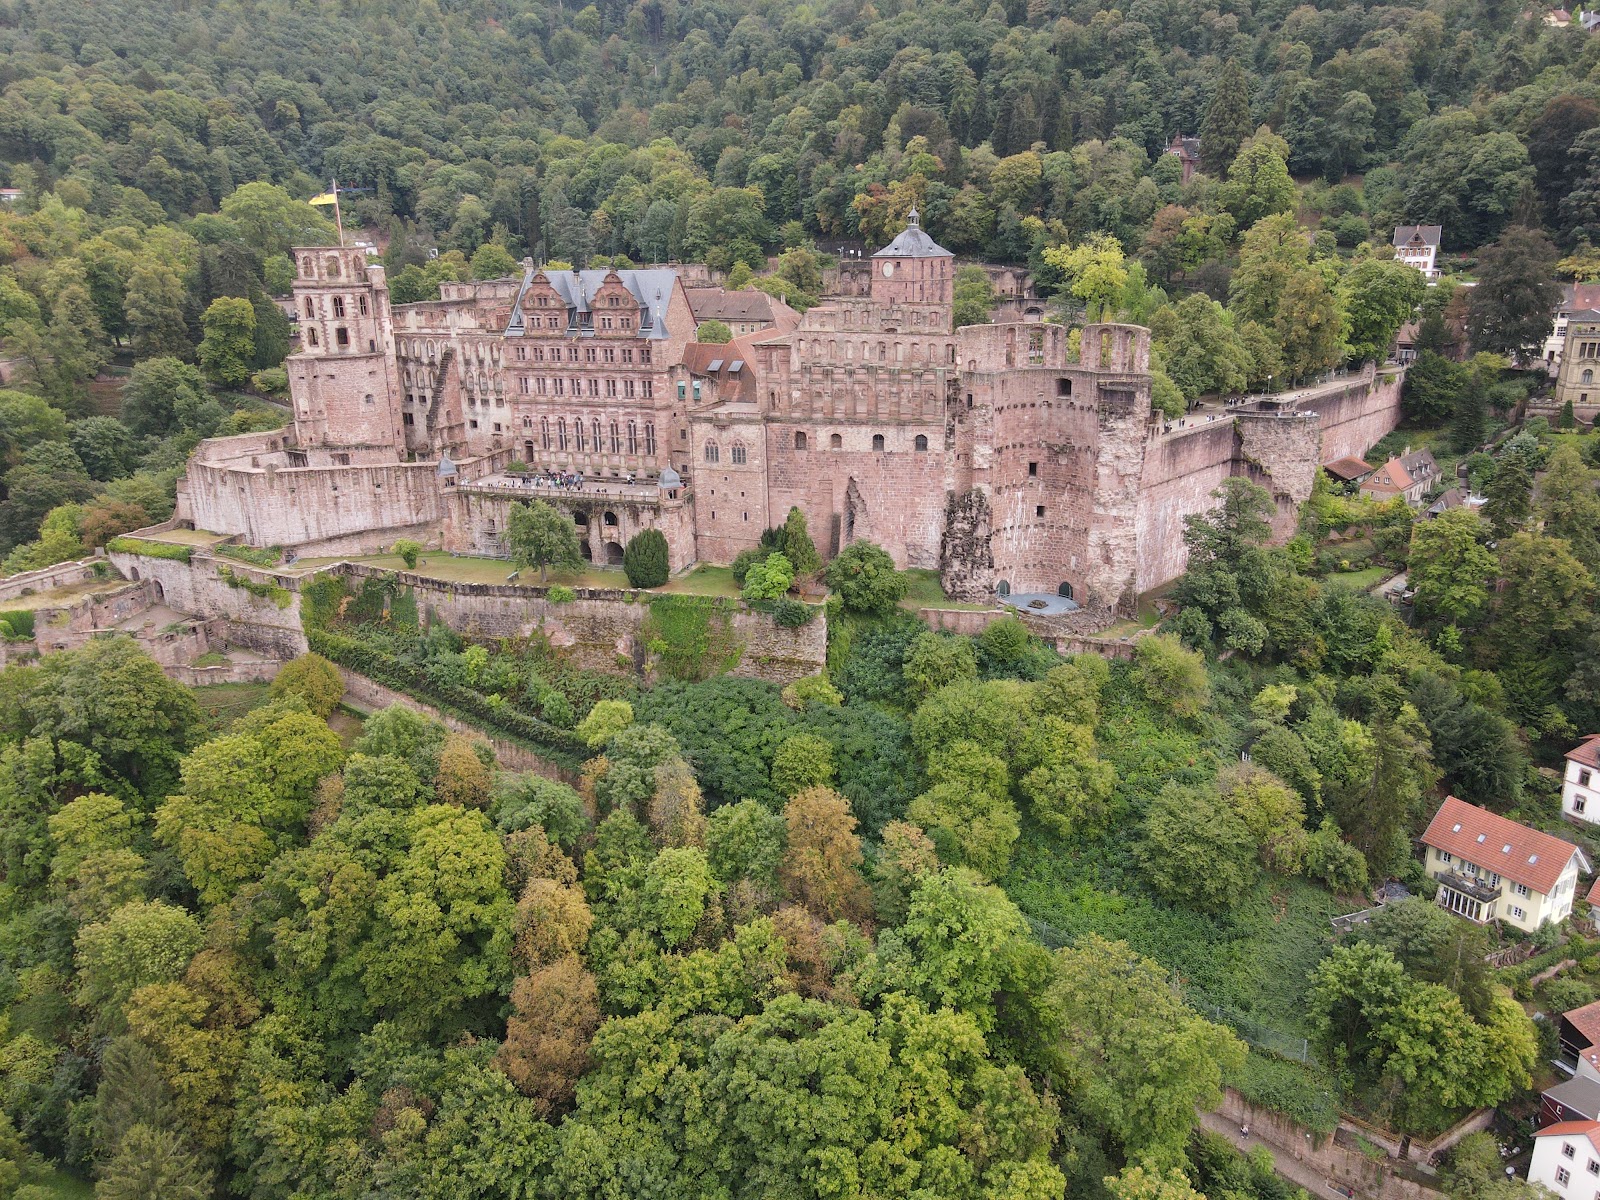 Heidelberg Palace